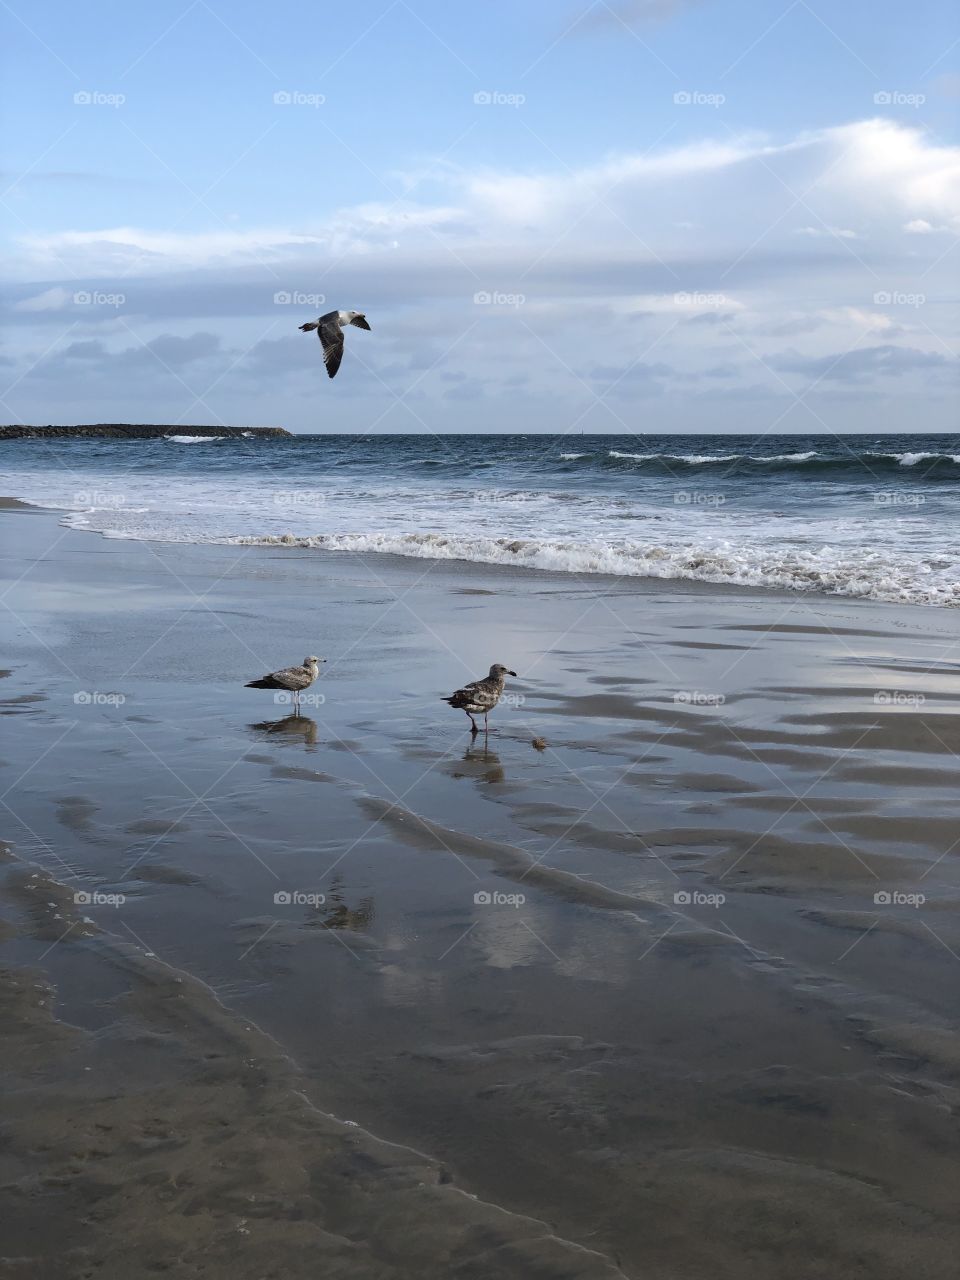 Gulls on the Shore